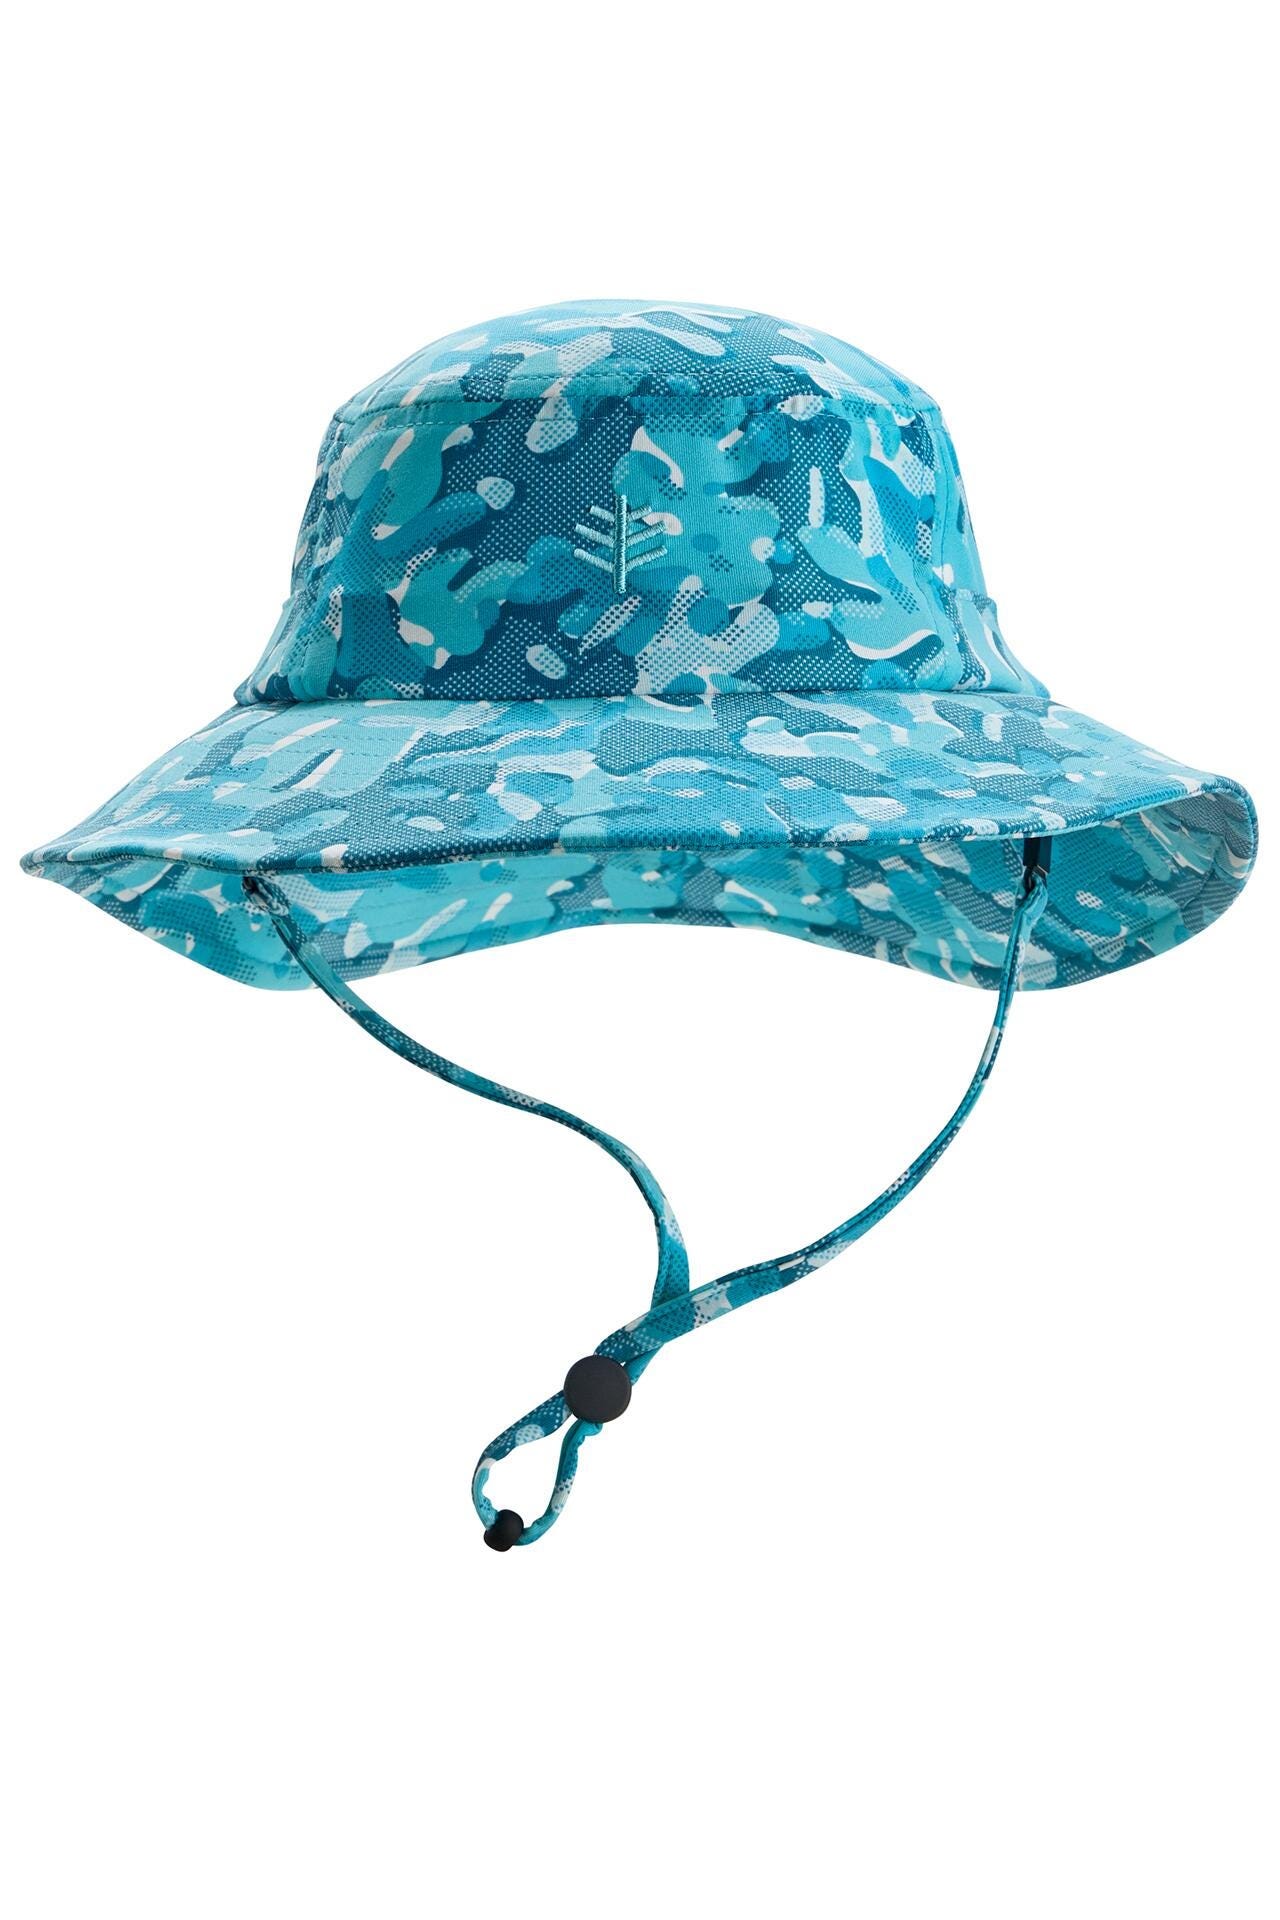 Fanvereka Sun Protection Hat UPF 50+ UV Toddler Kids Protection Cotton  Bucket Cap